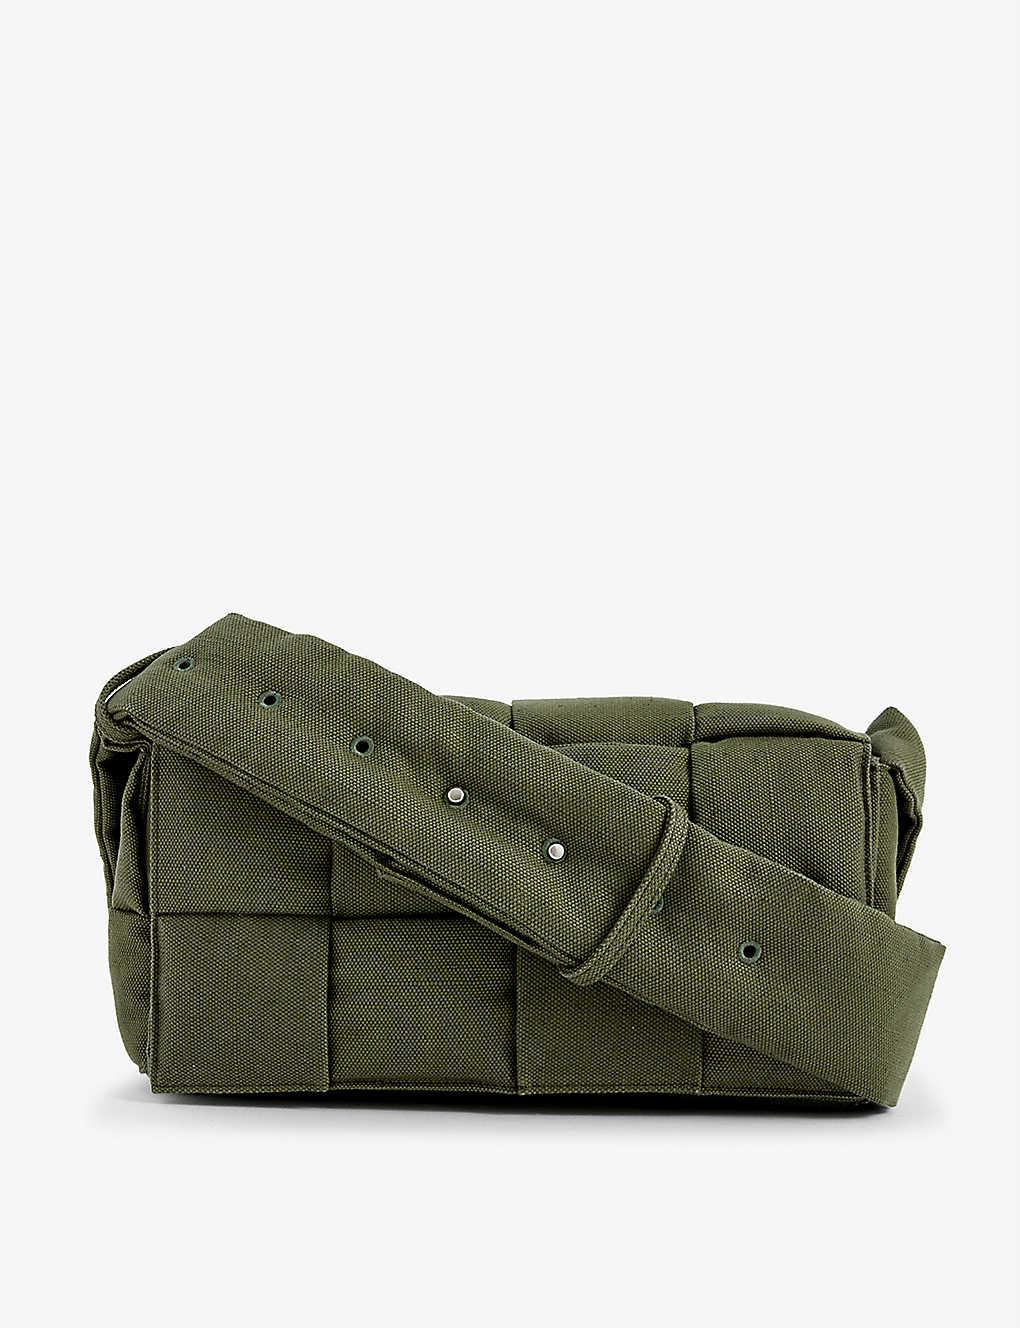 Bottega Veneta Cassette Intrecciato Woven Cross-body Bag in Green